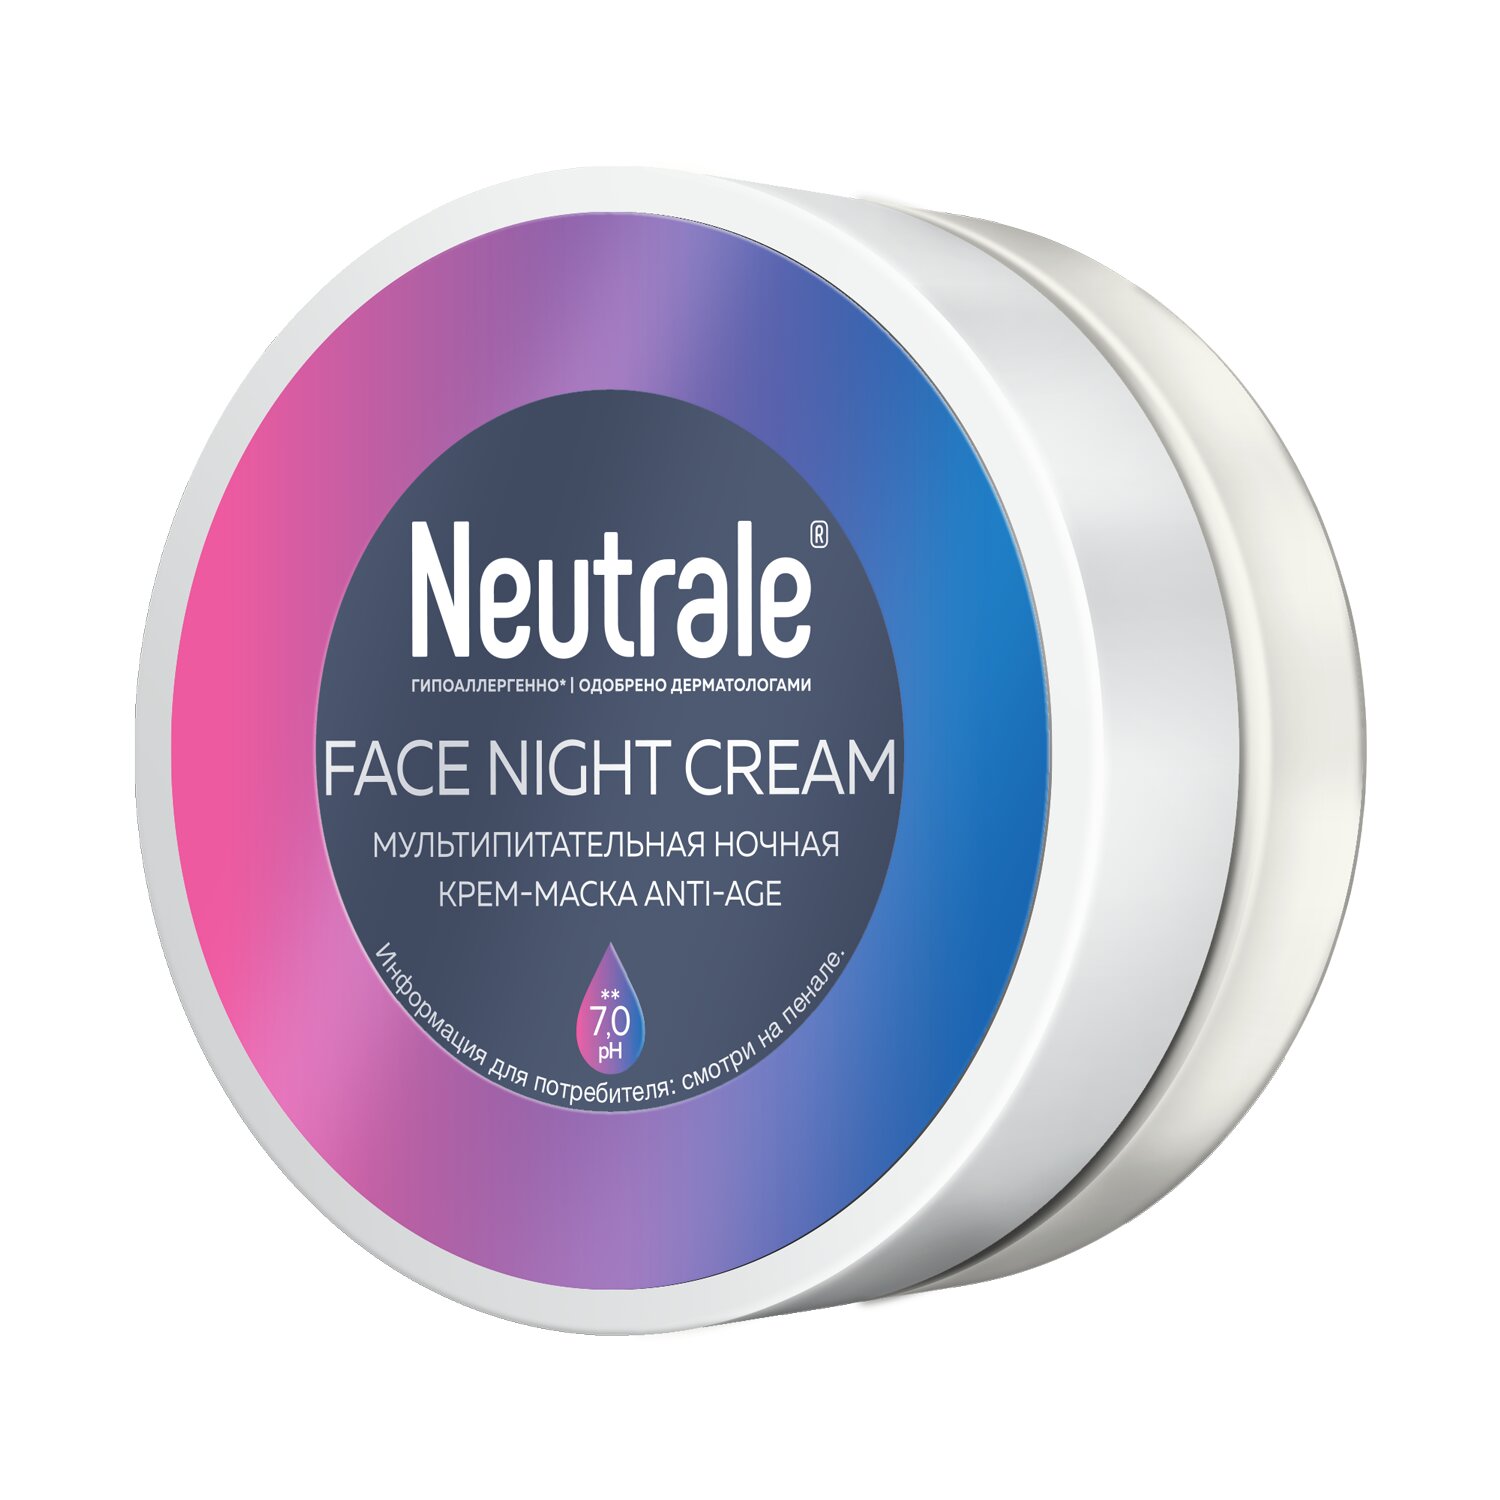 Neutrale Мультипитательная ночная несмываемая крем-маска для